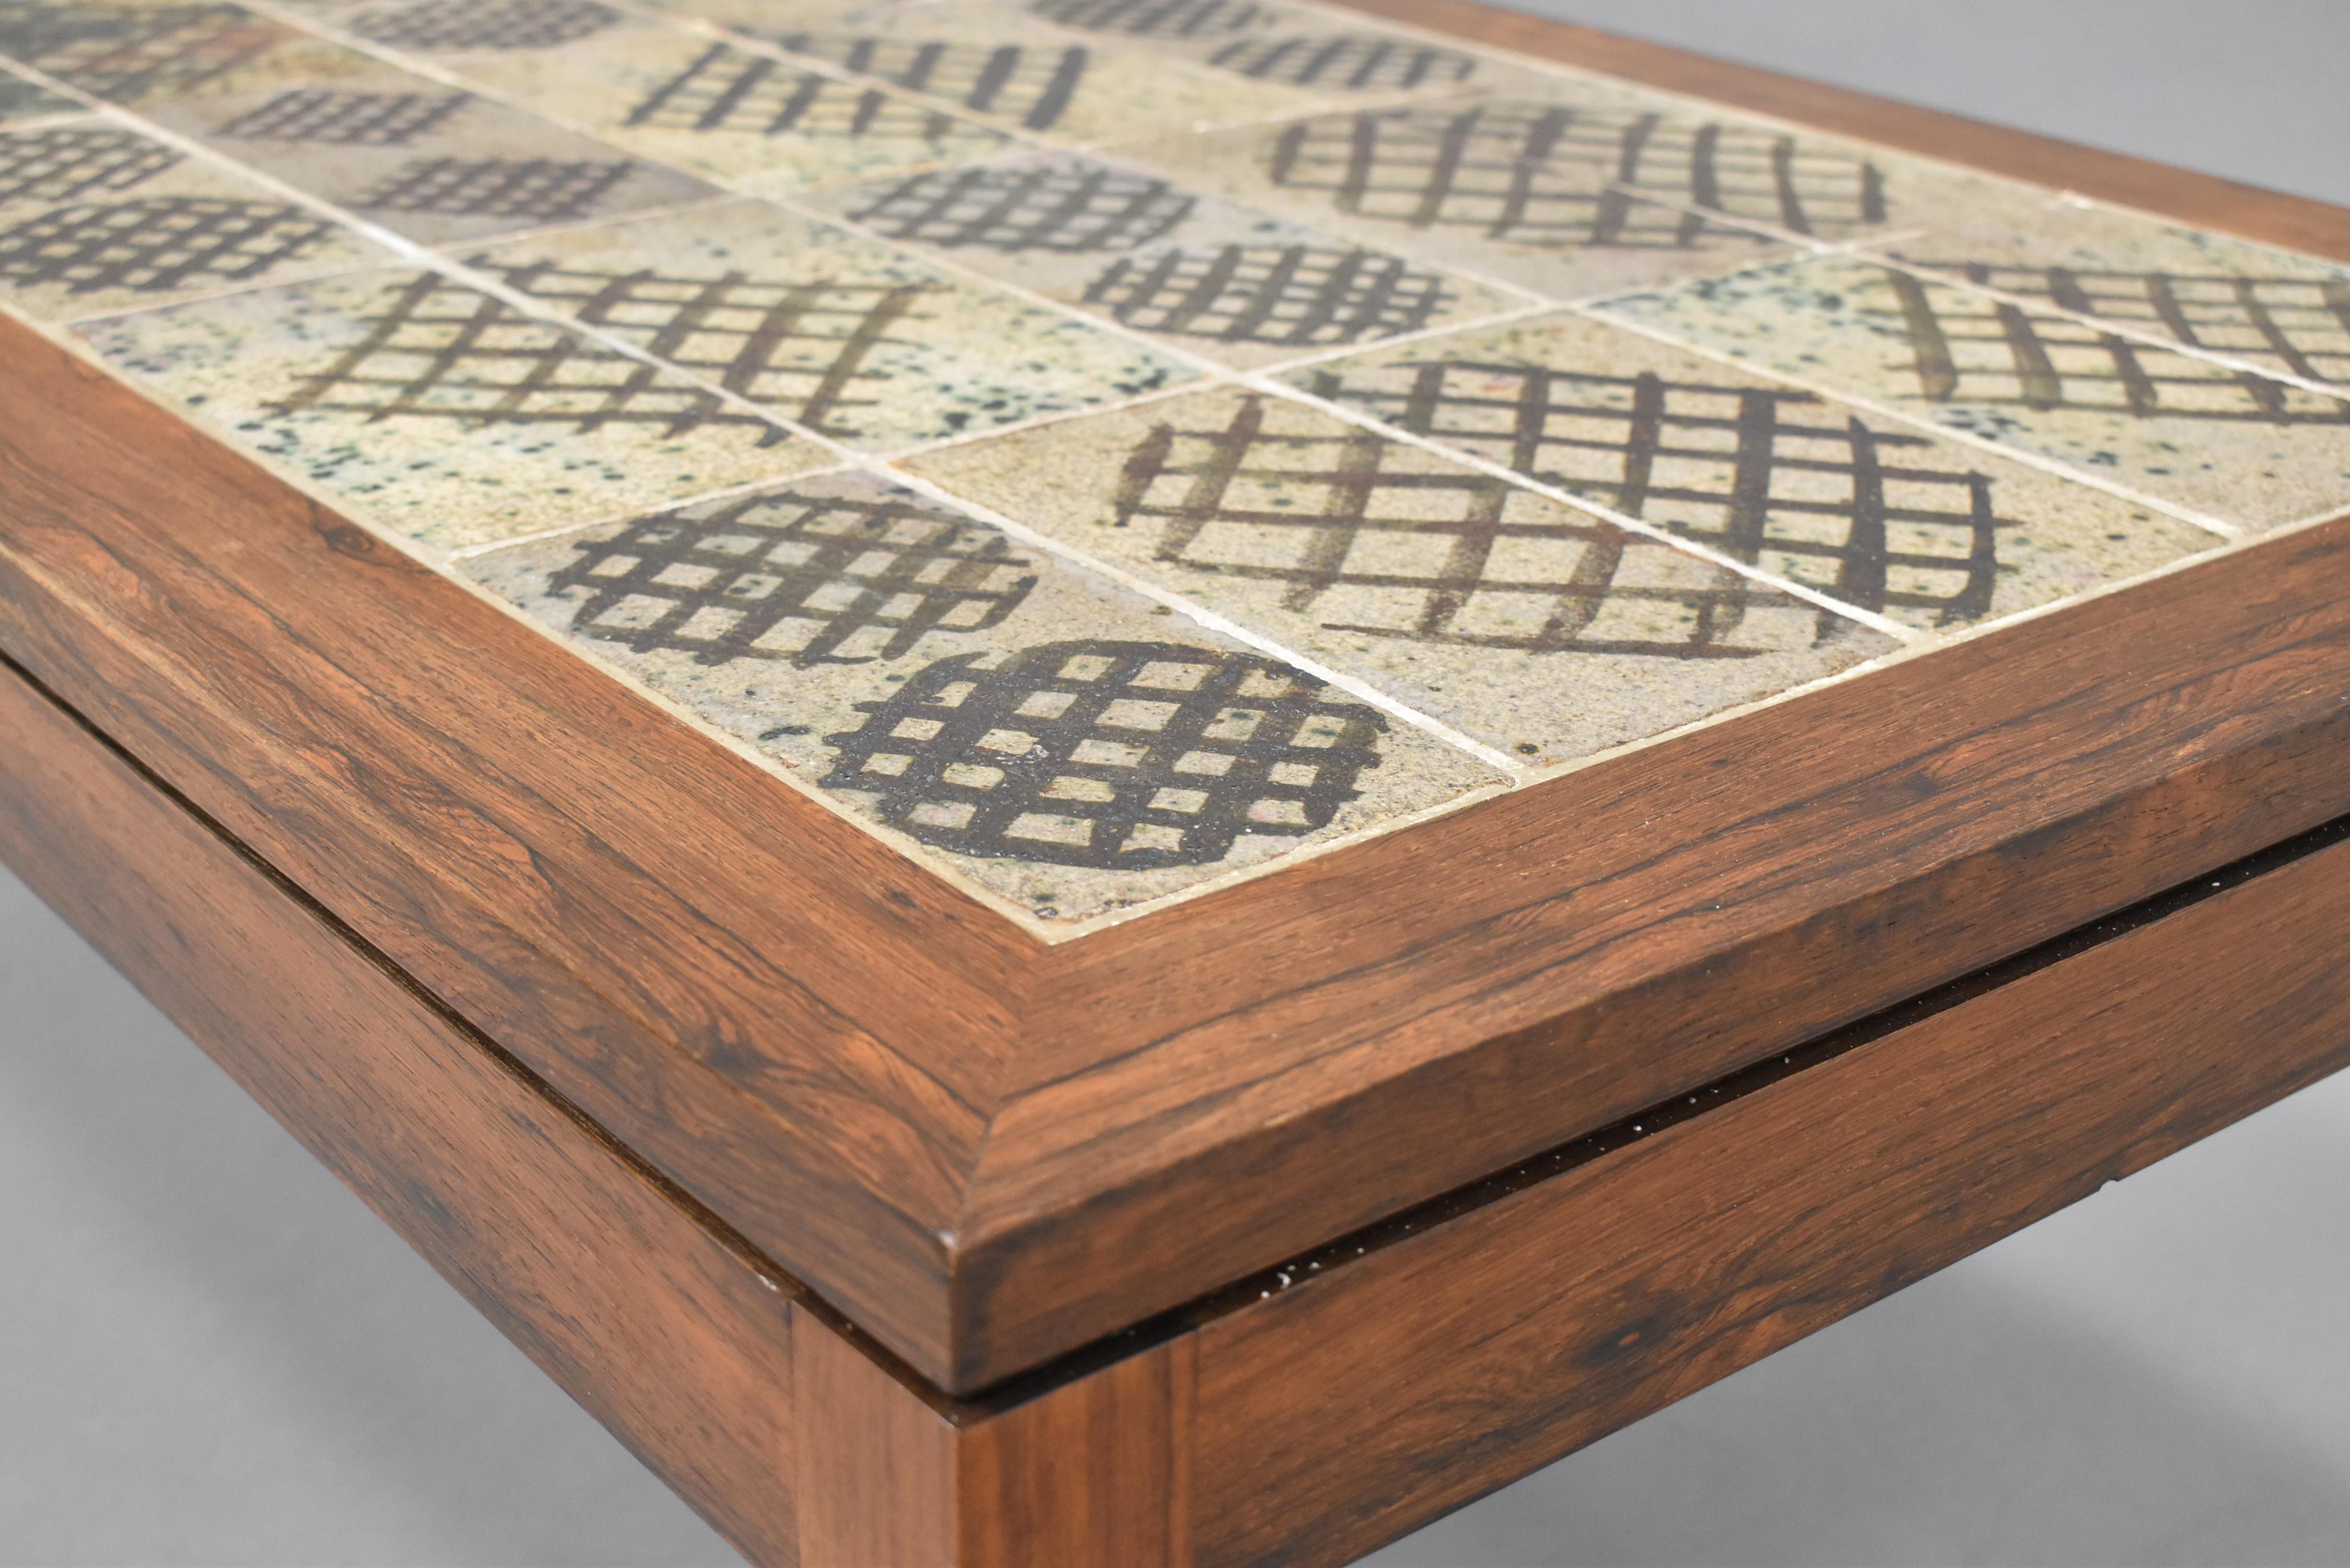 retro tiled coffee table